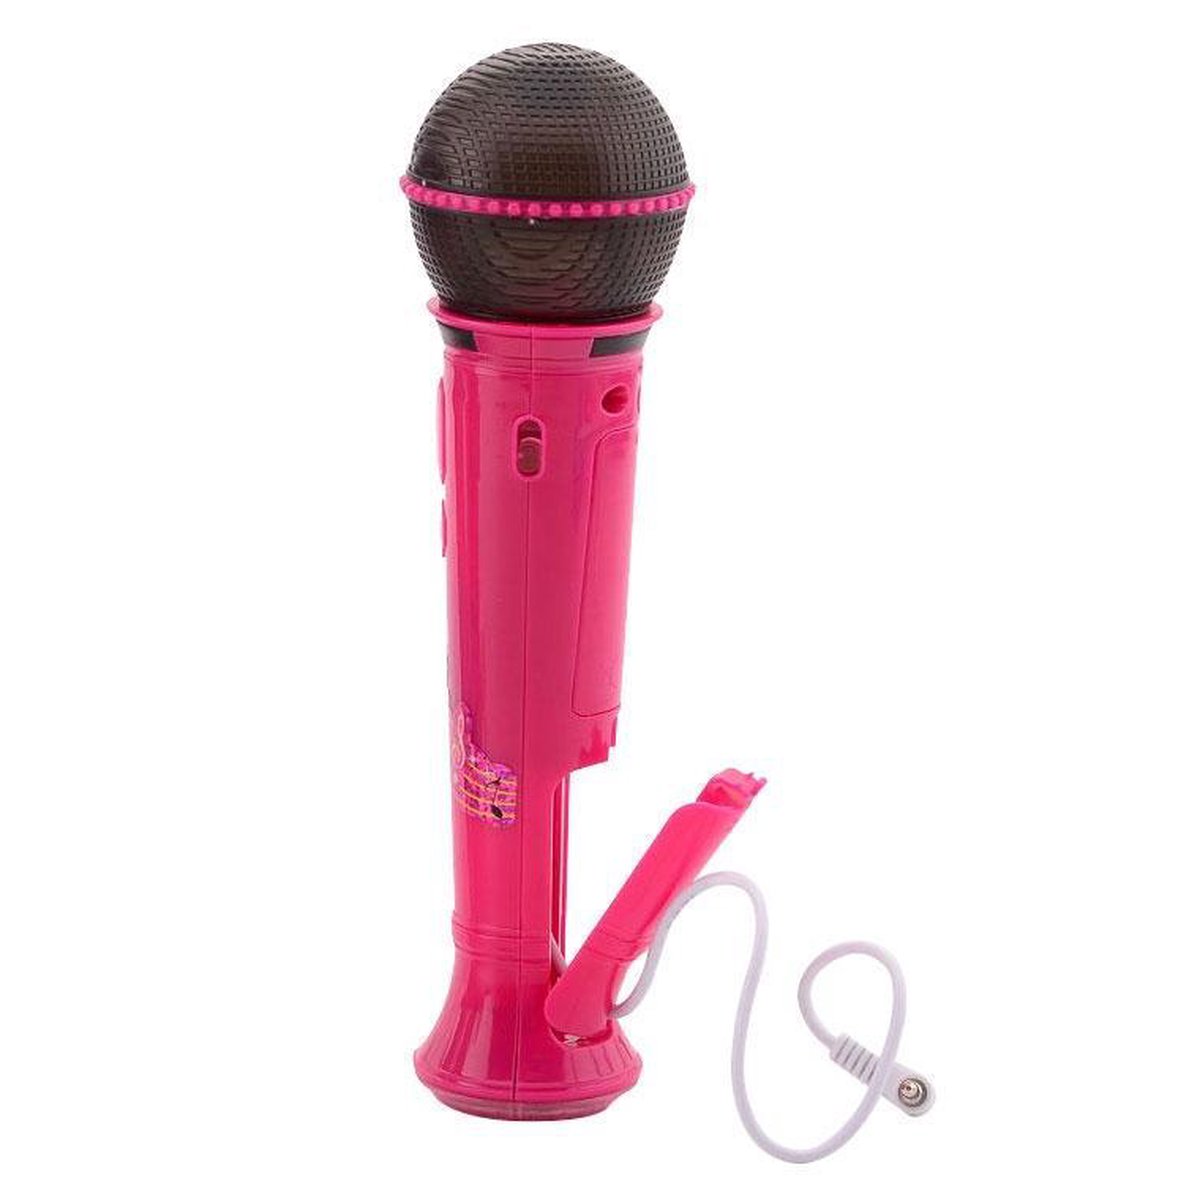 John Toys Sing Along microfoon 22 cm | bol.com